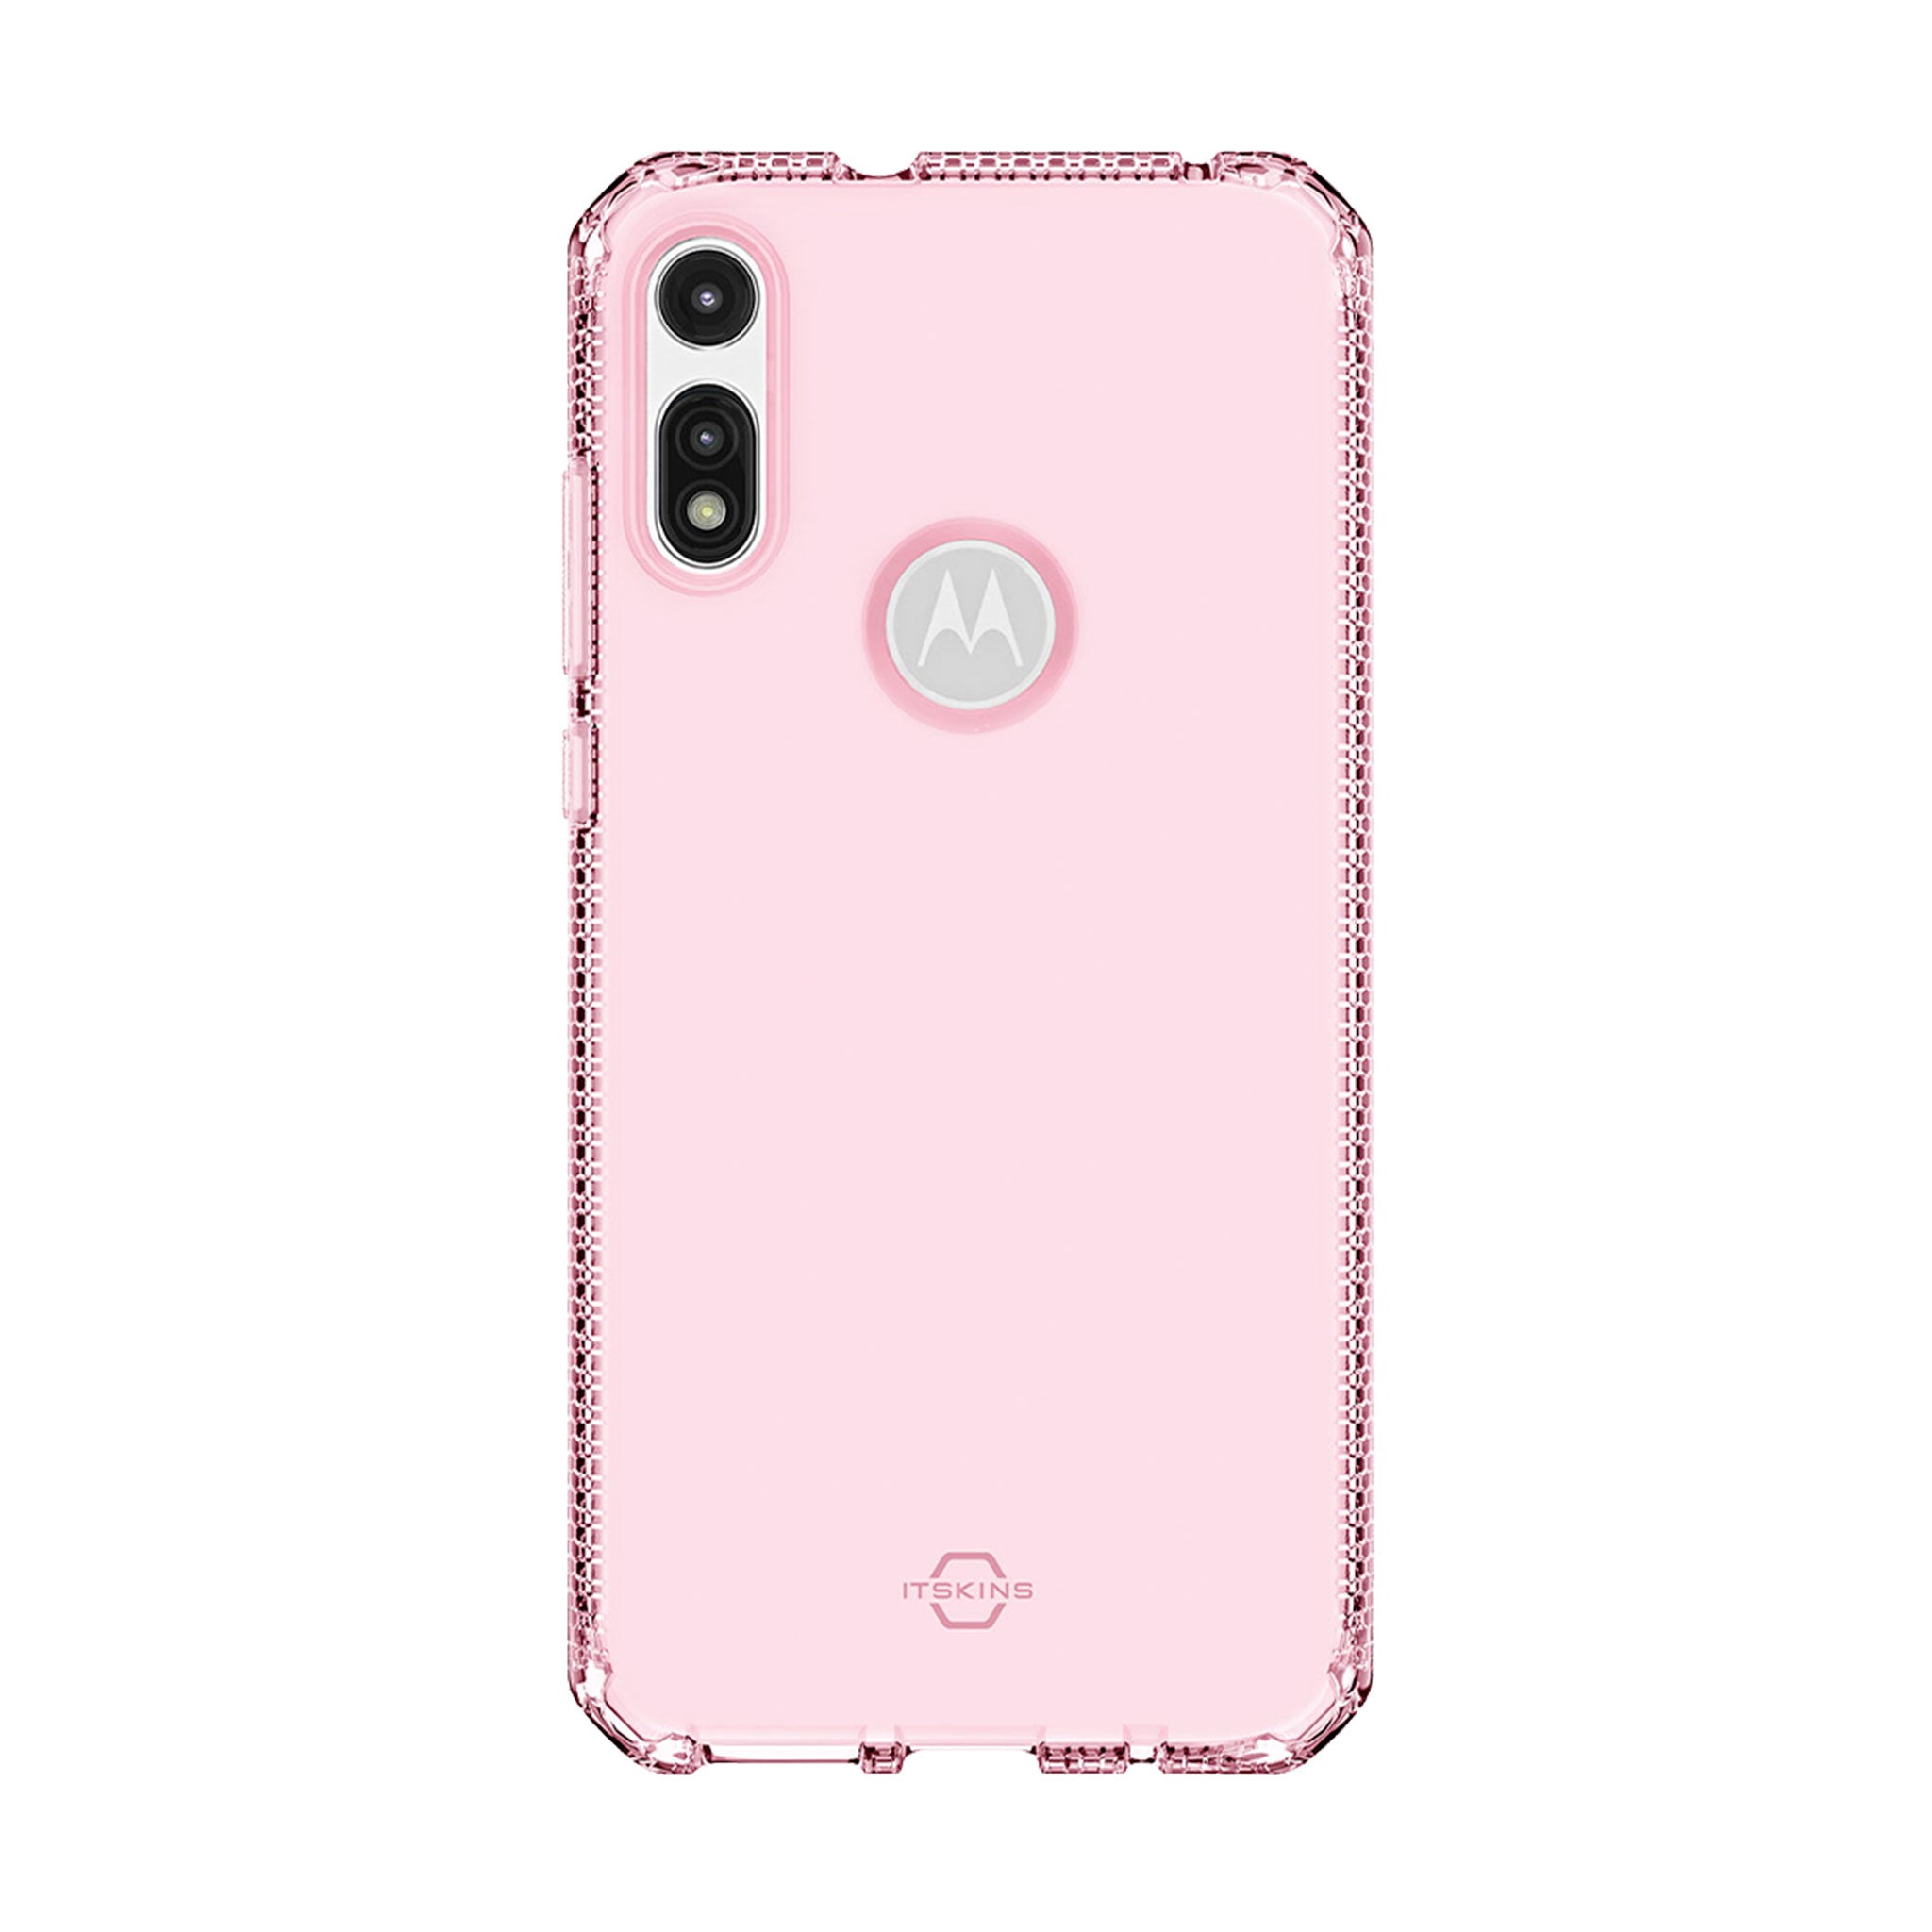 Itskins - Spectrum Clear Case For Motorola Moto E - Light Pink